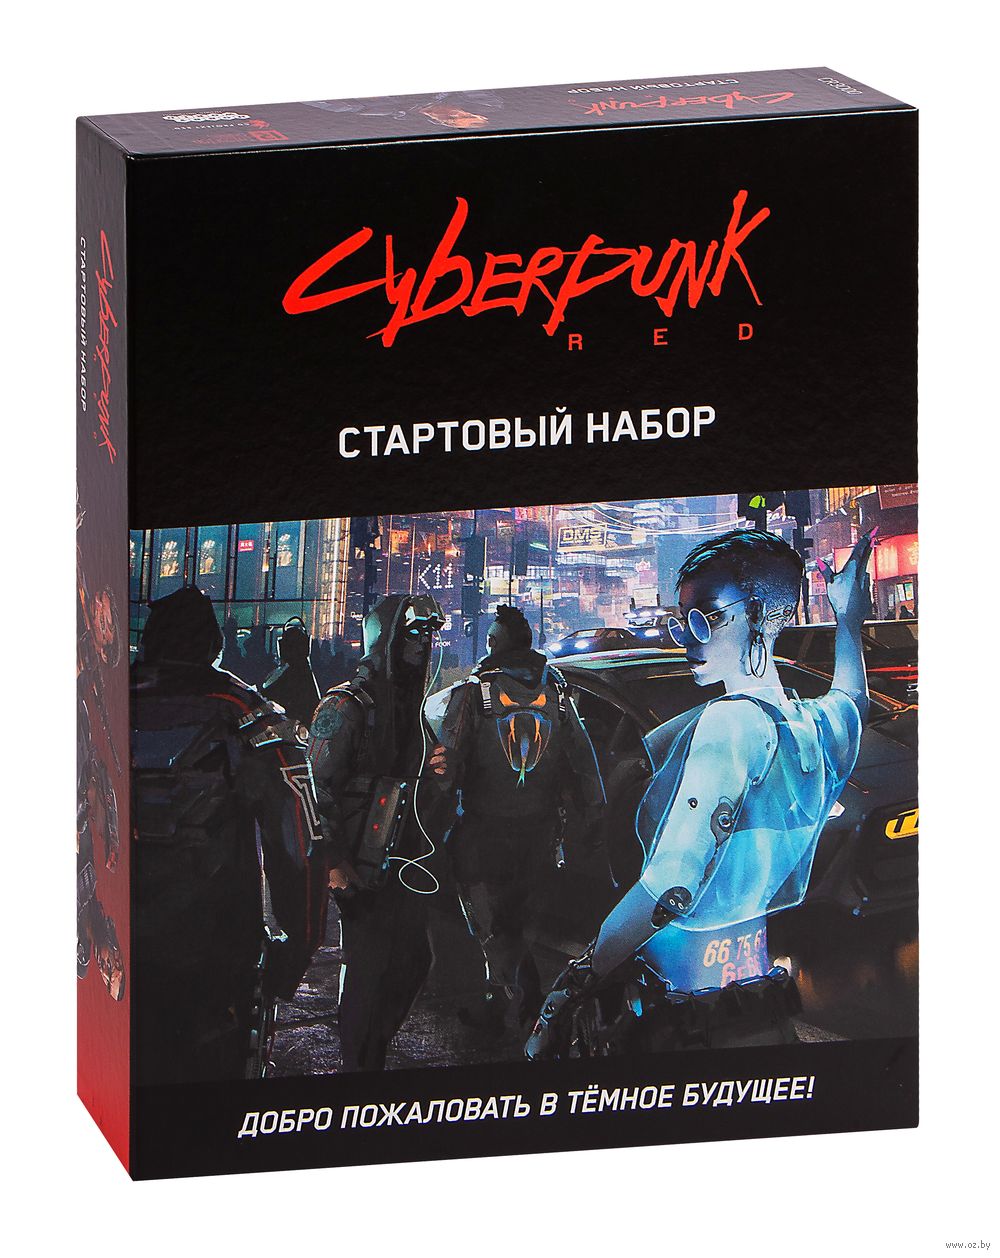 Cyberpunk red стартовый набор лист персонажа фото 90